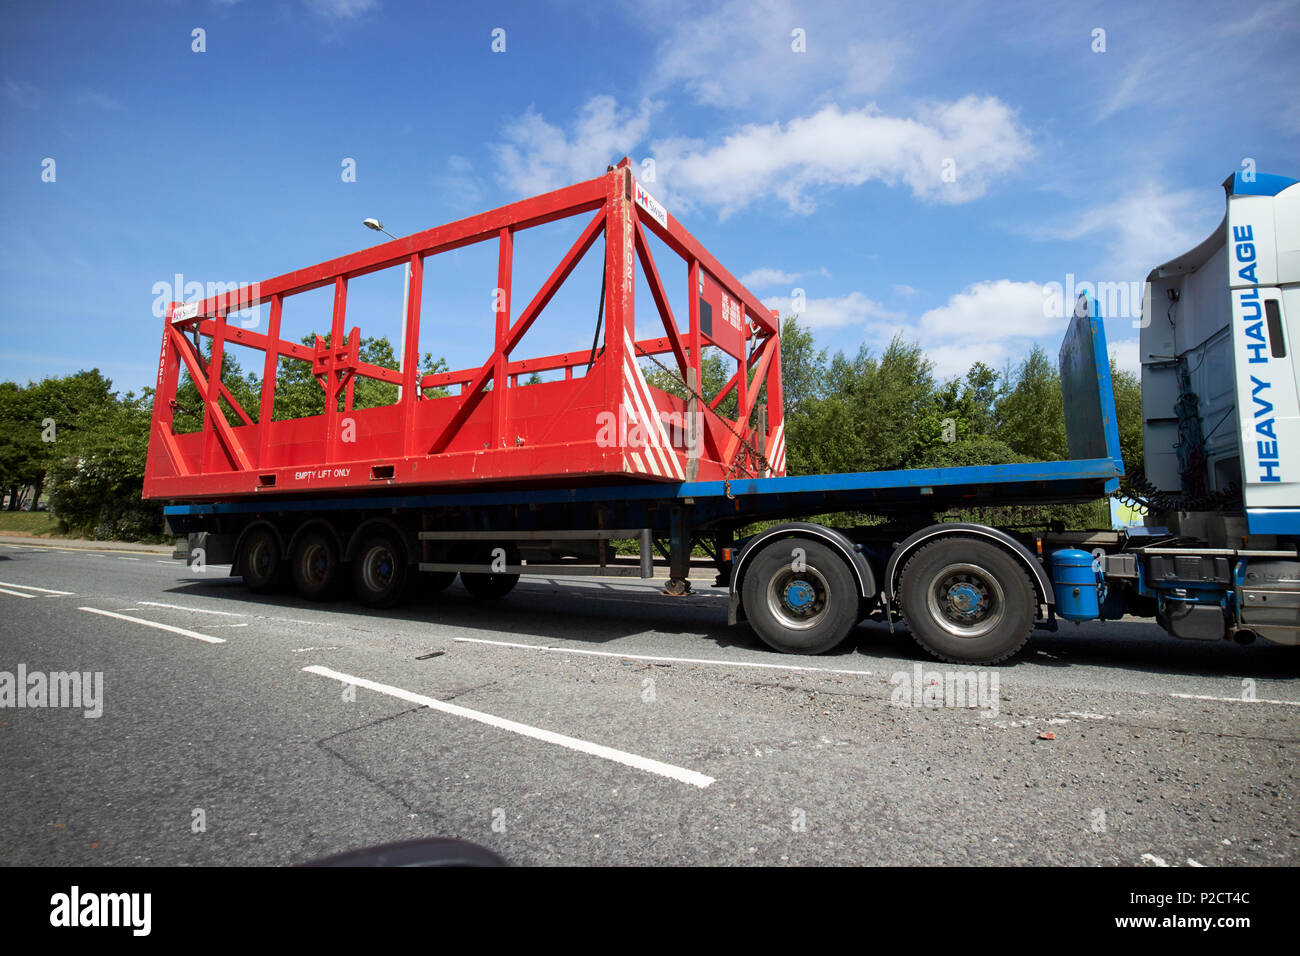 Carretera Transporte pesado camión que transportaba carga ancha estructura metálica grande lancashire Inglaterra Foto de stock